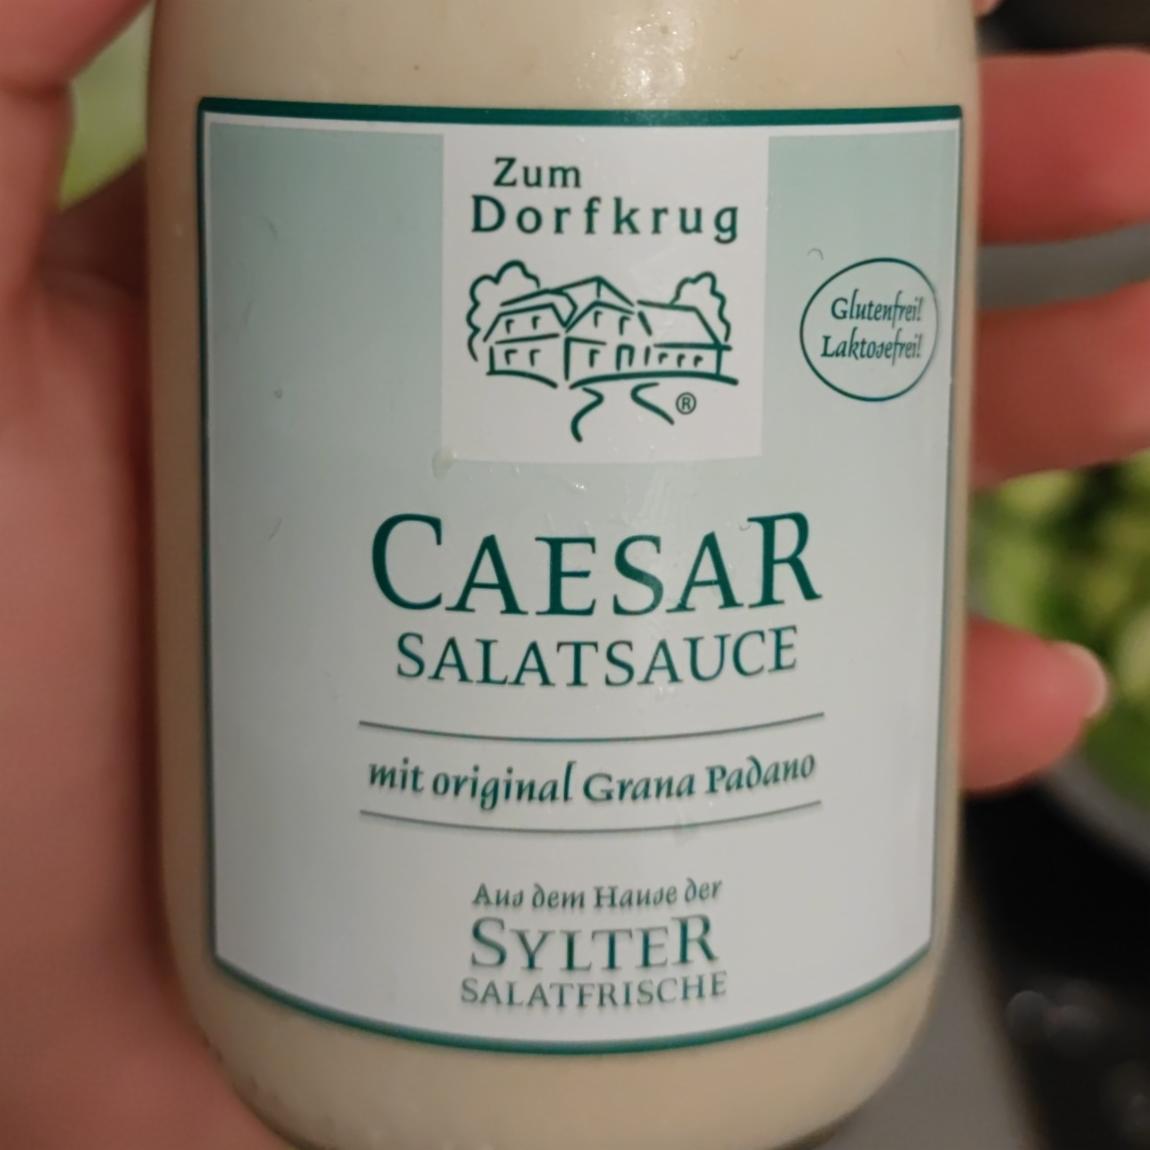 Фото - соус для салата Цезарь Caesar salatsauce Zum Dofkrug